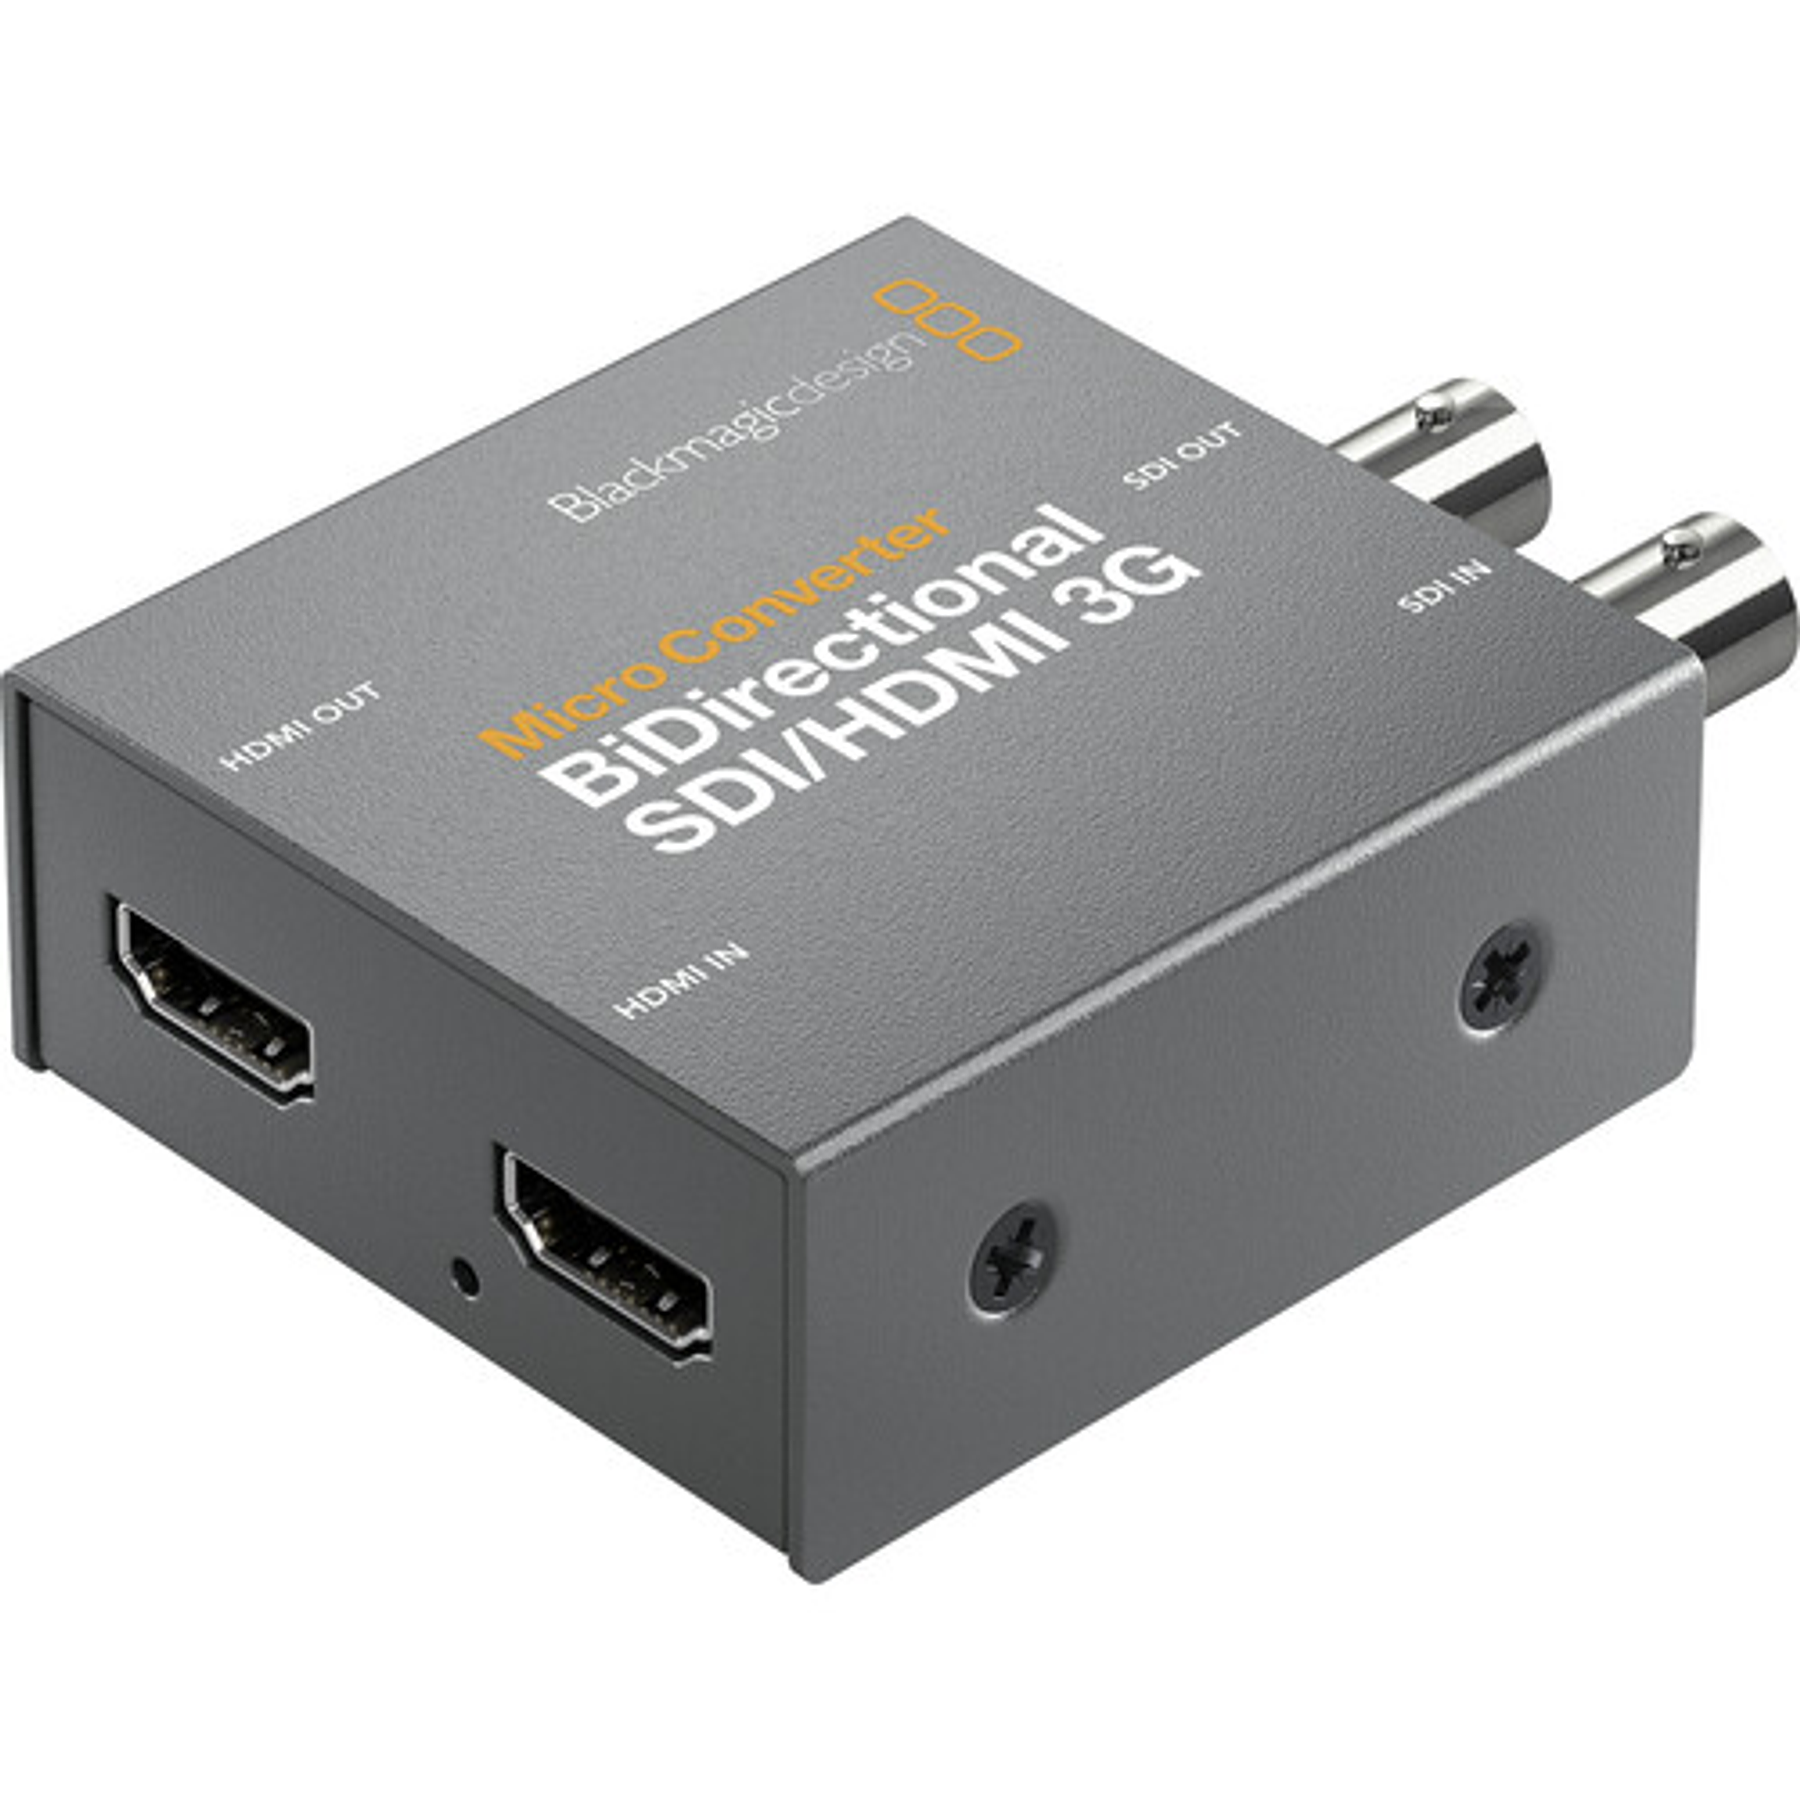 Blackmagic Design Micro Converter Bidireccional SDI/HDMI 3G